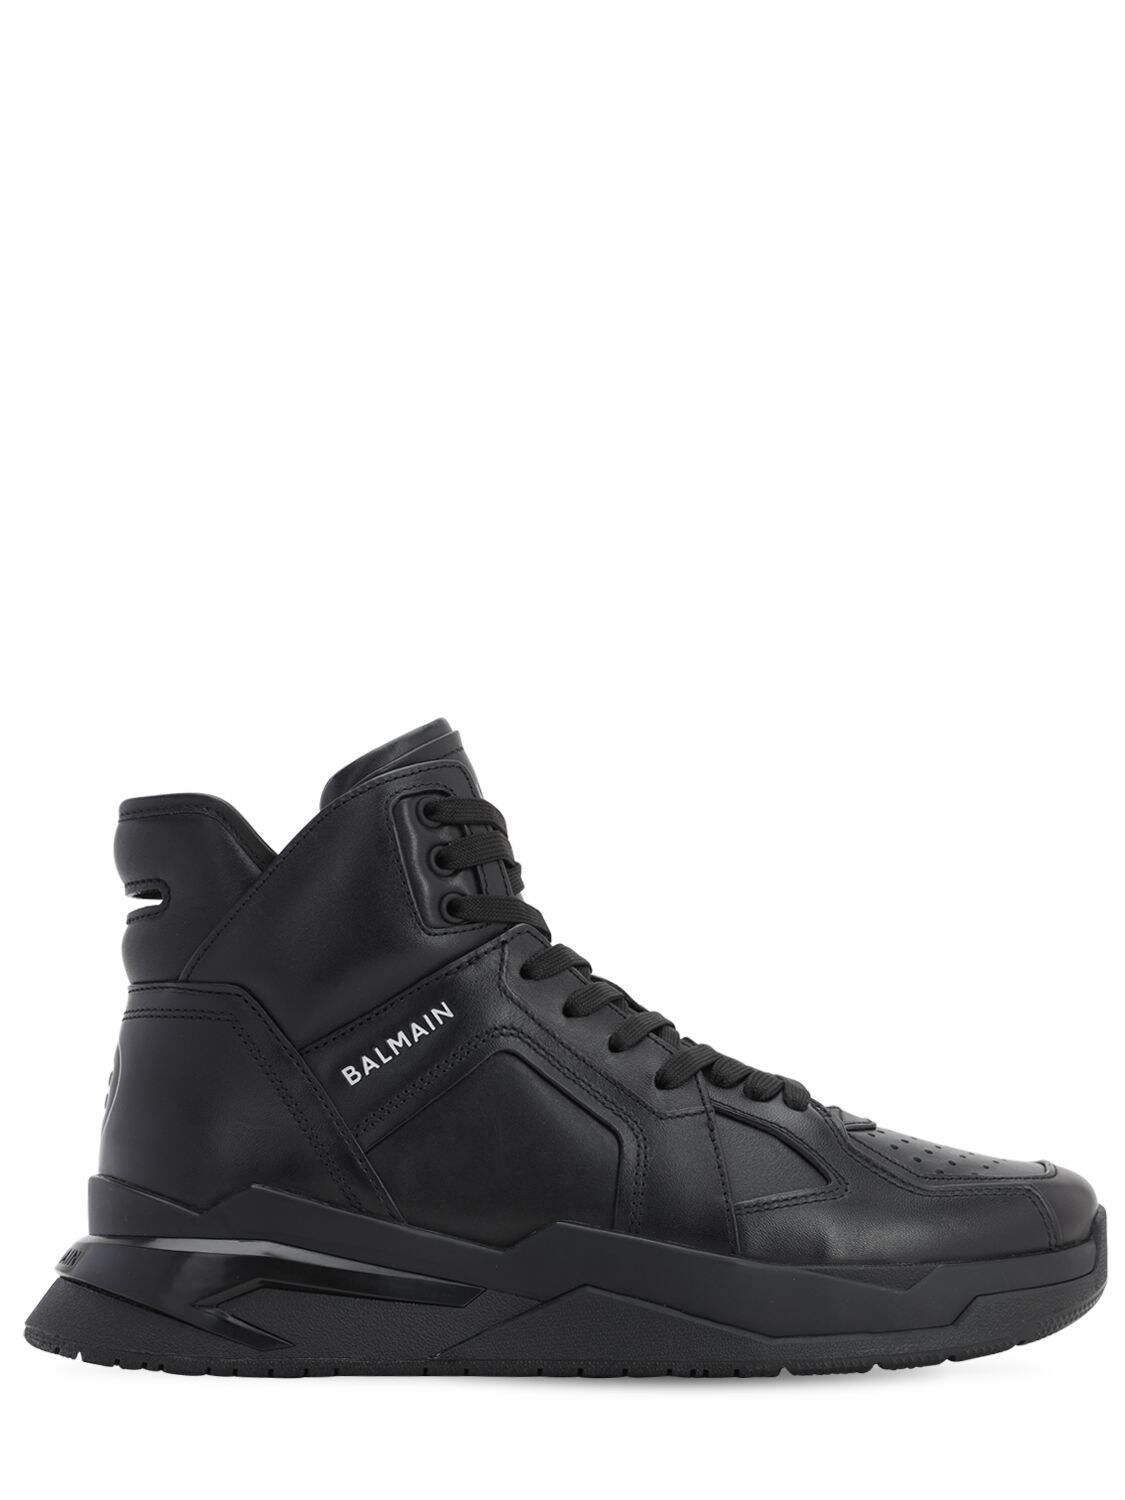 Balmain B-ball Leather High Top Sneakers In Black | ModeSens